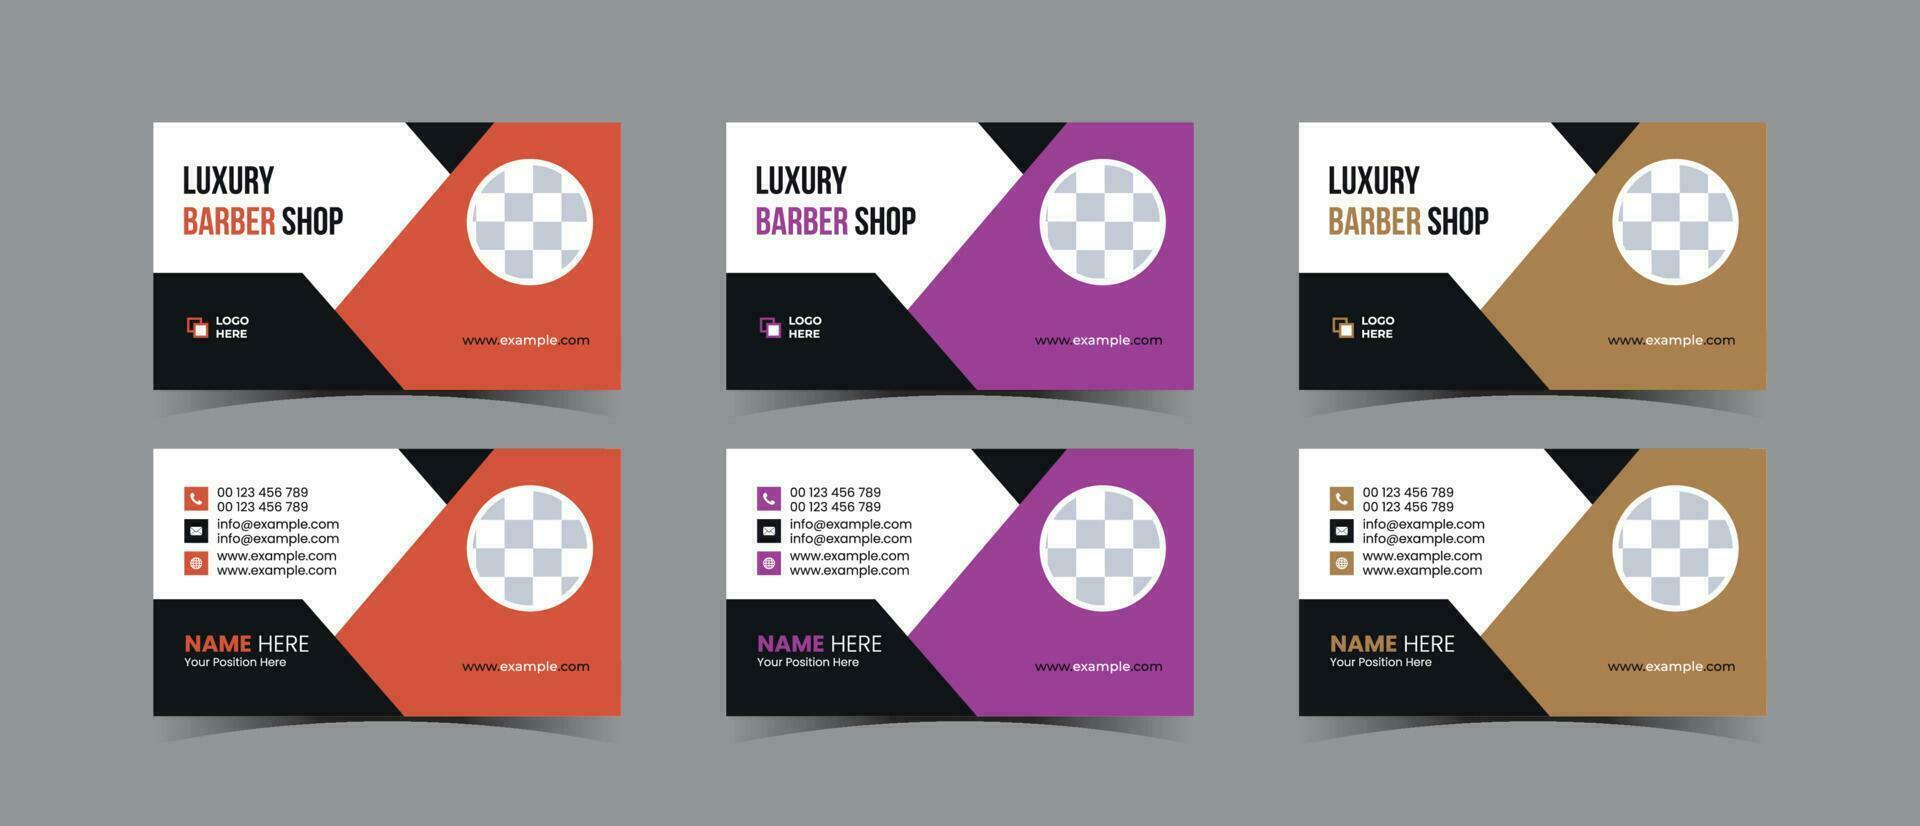 Business card design for Barbershop business vector